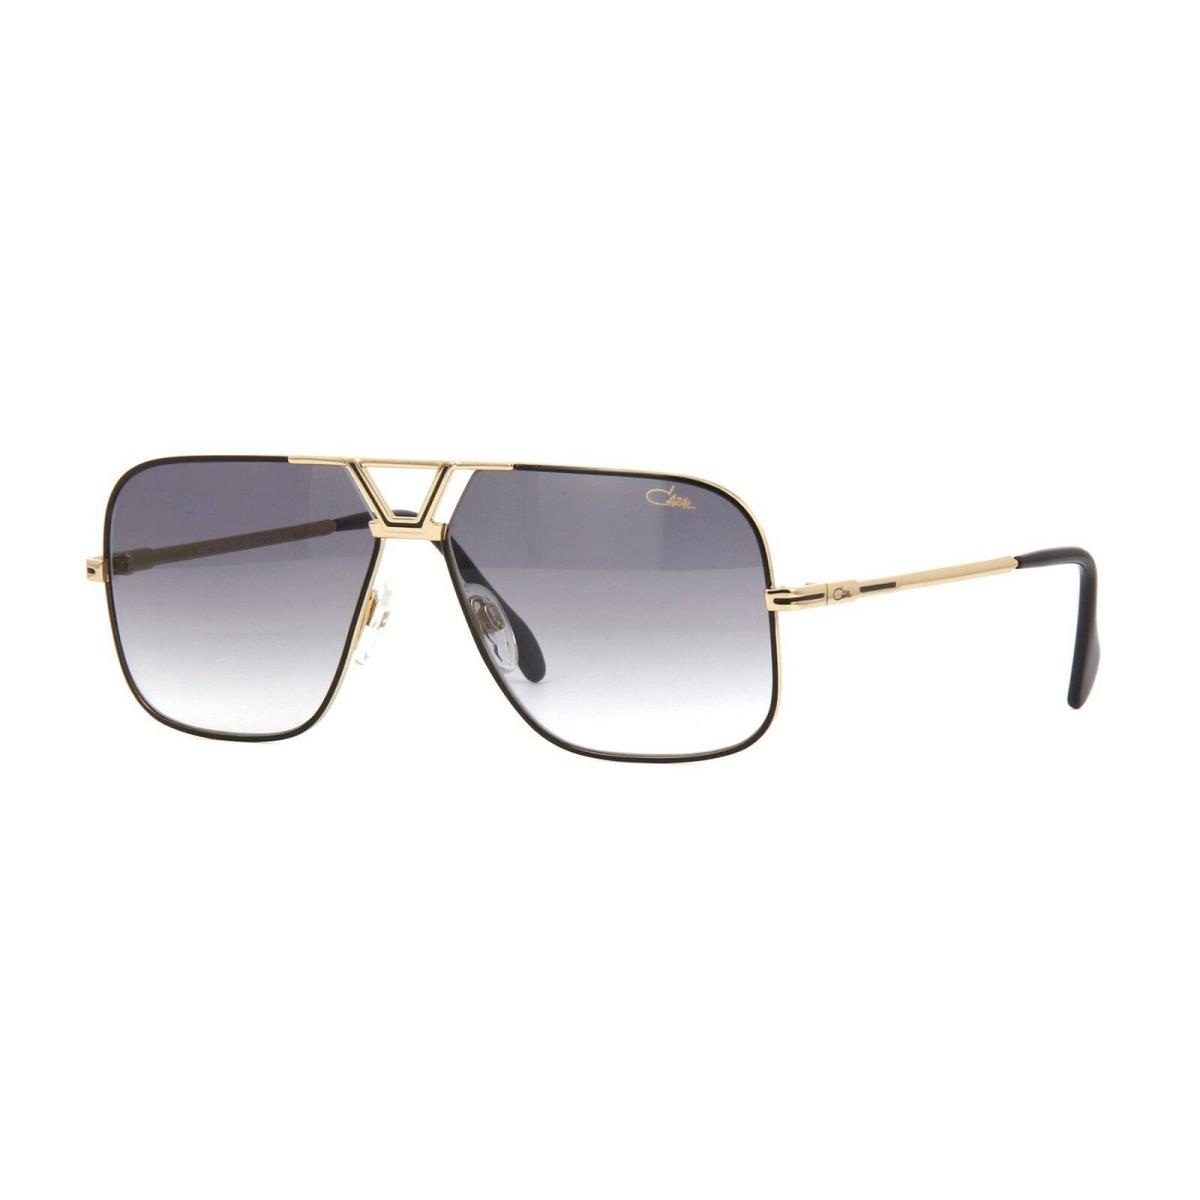 Cazal Legends 725/3 Black Gold/dark Grey Shaded 002 Sunglasses - Frame: Black Gold, Lens: Dark Grey Shaded